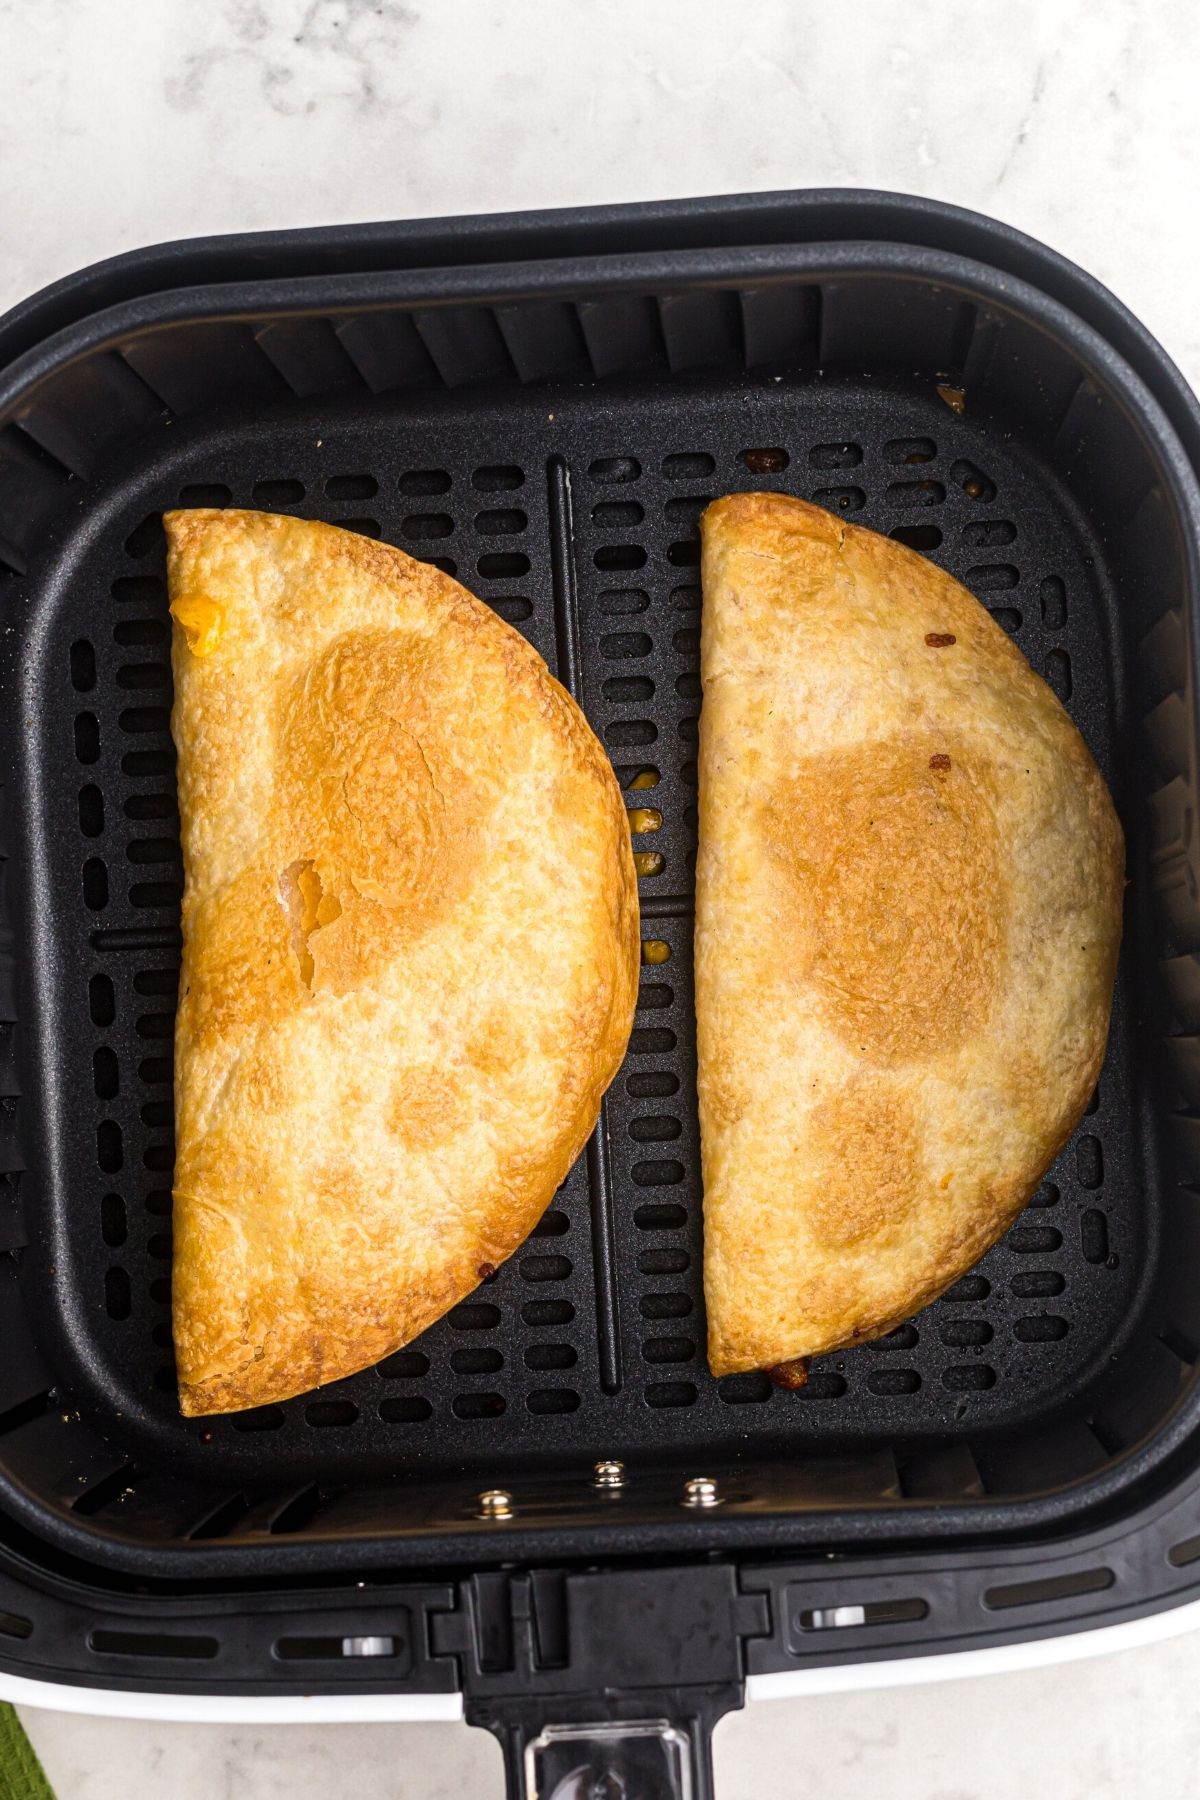 Crispy golden quesadillas in the air fryer basket